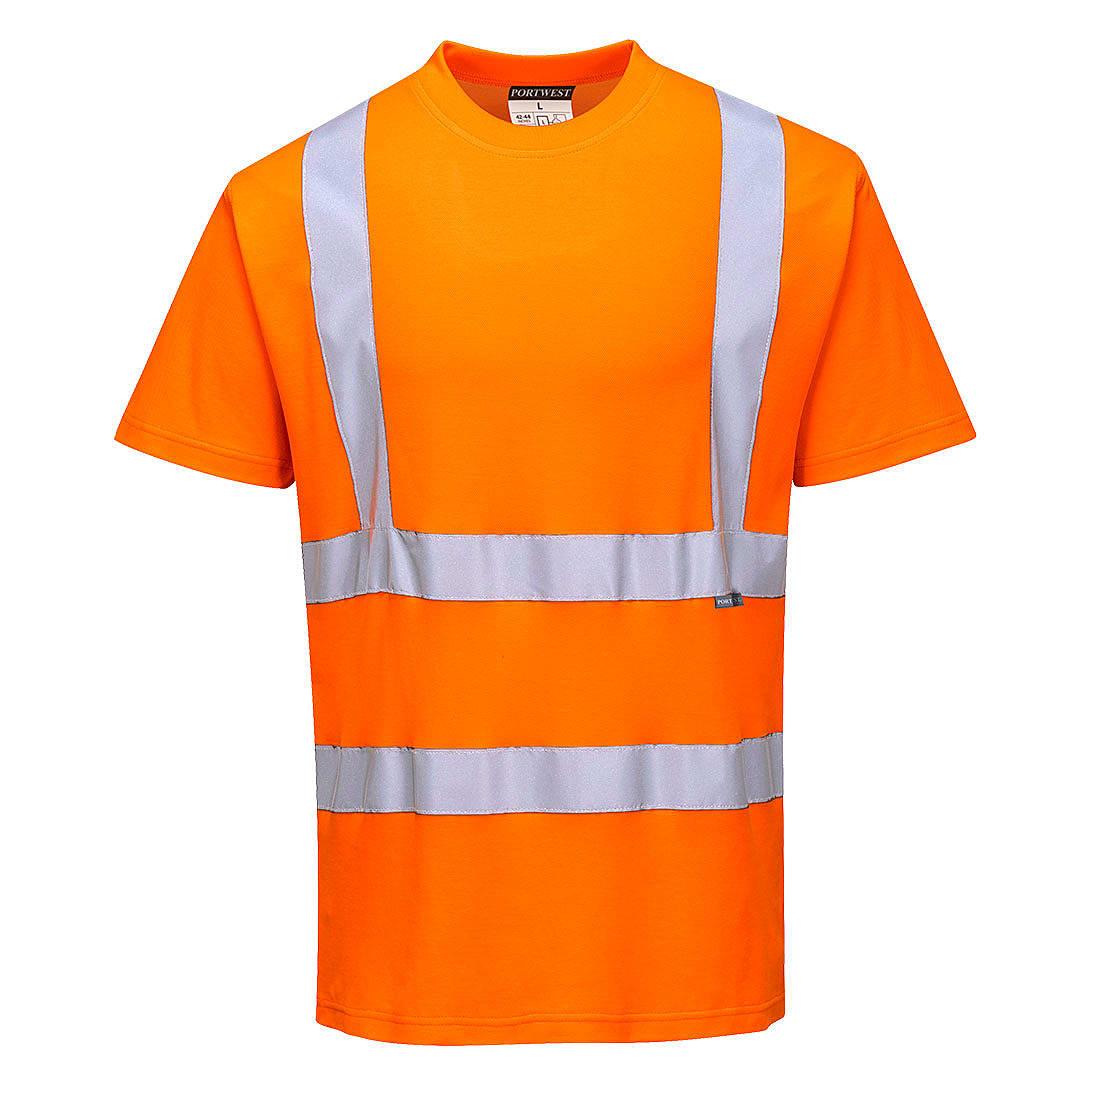 Portwest Cotton Comfort Short-Sleeve T-Shirt in Orange (Product Code: S170)